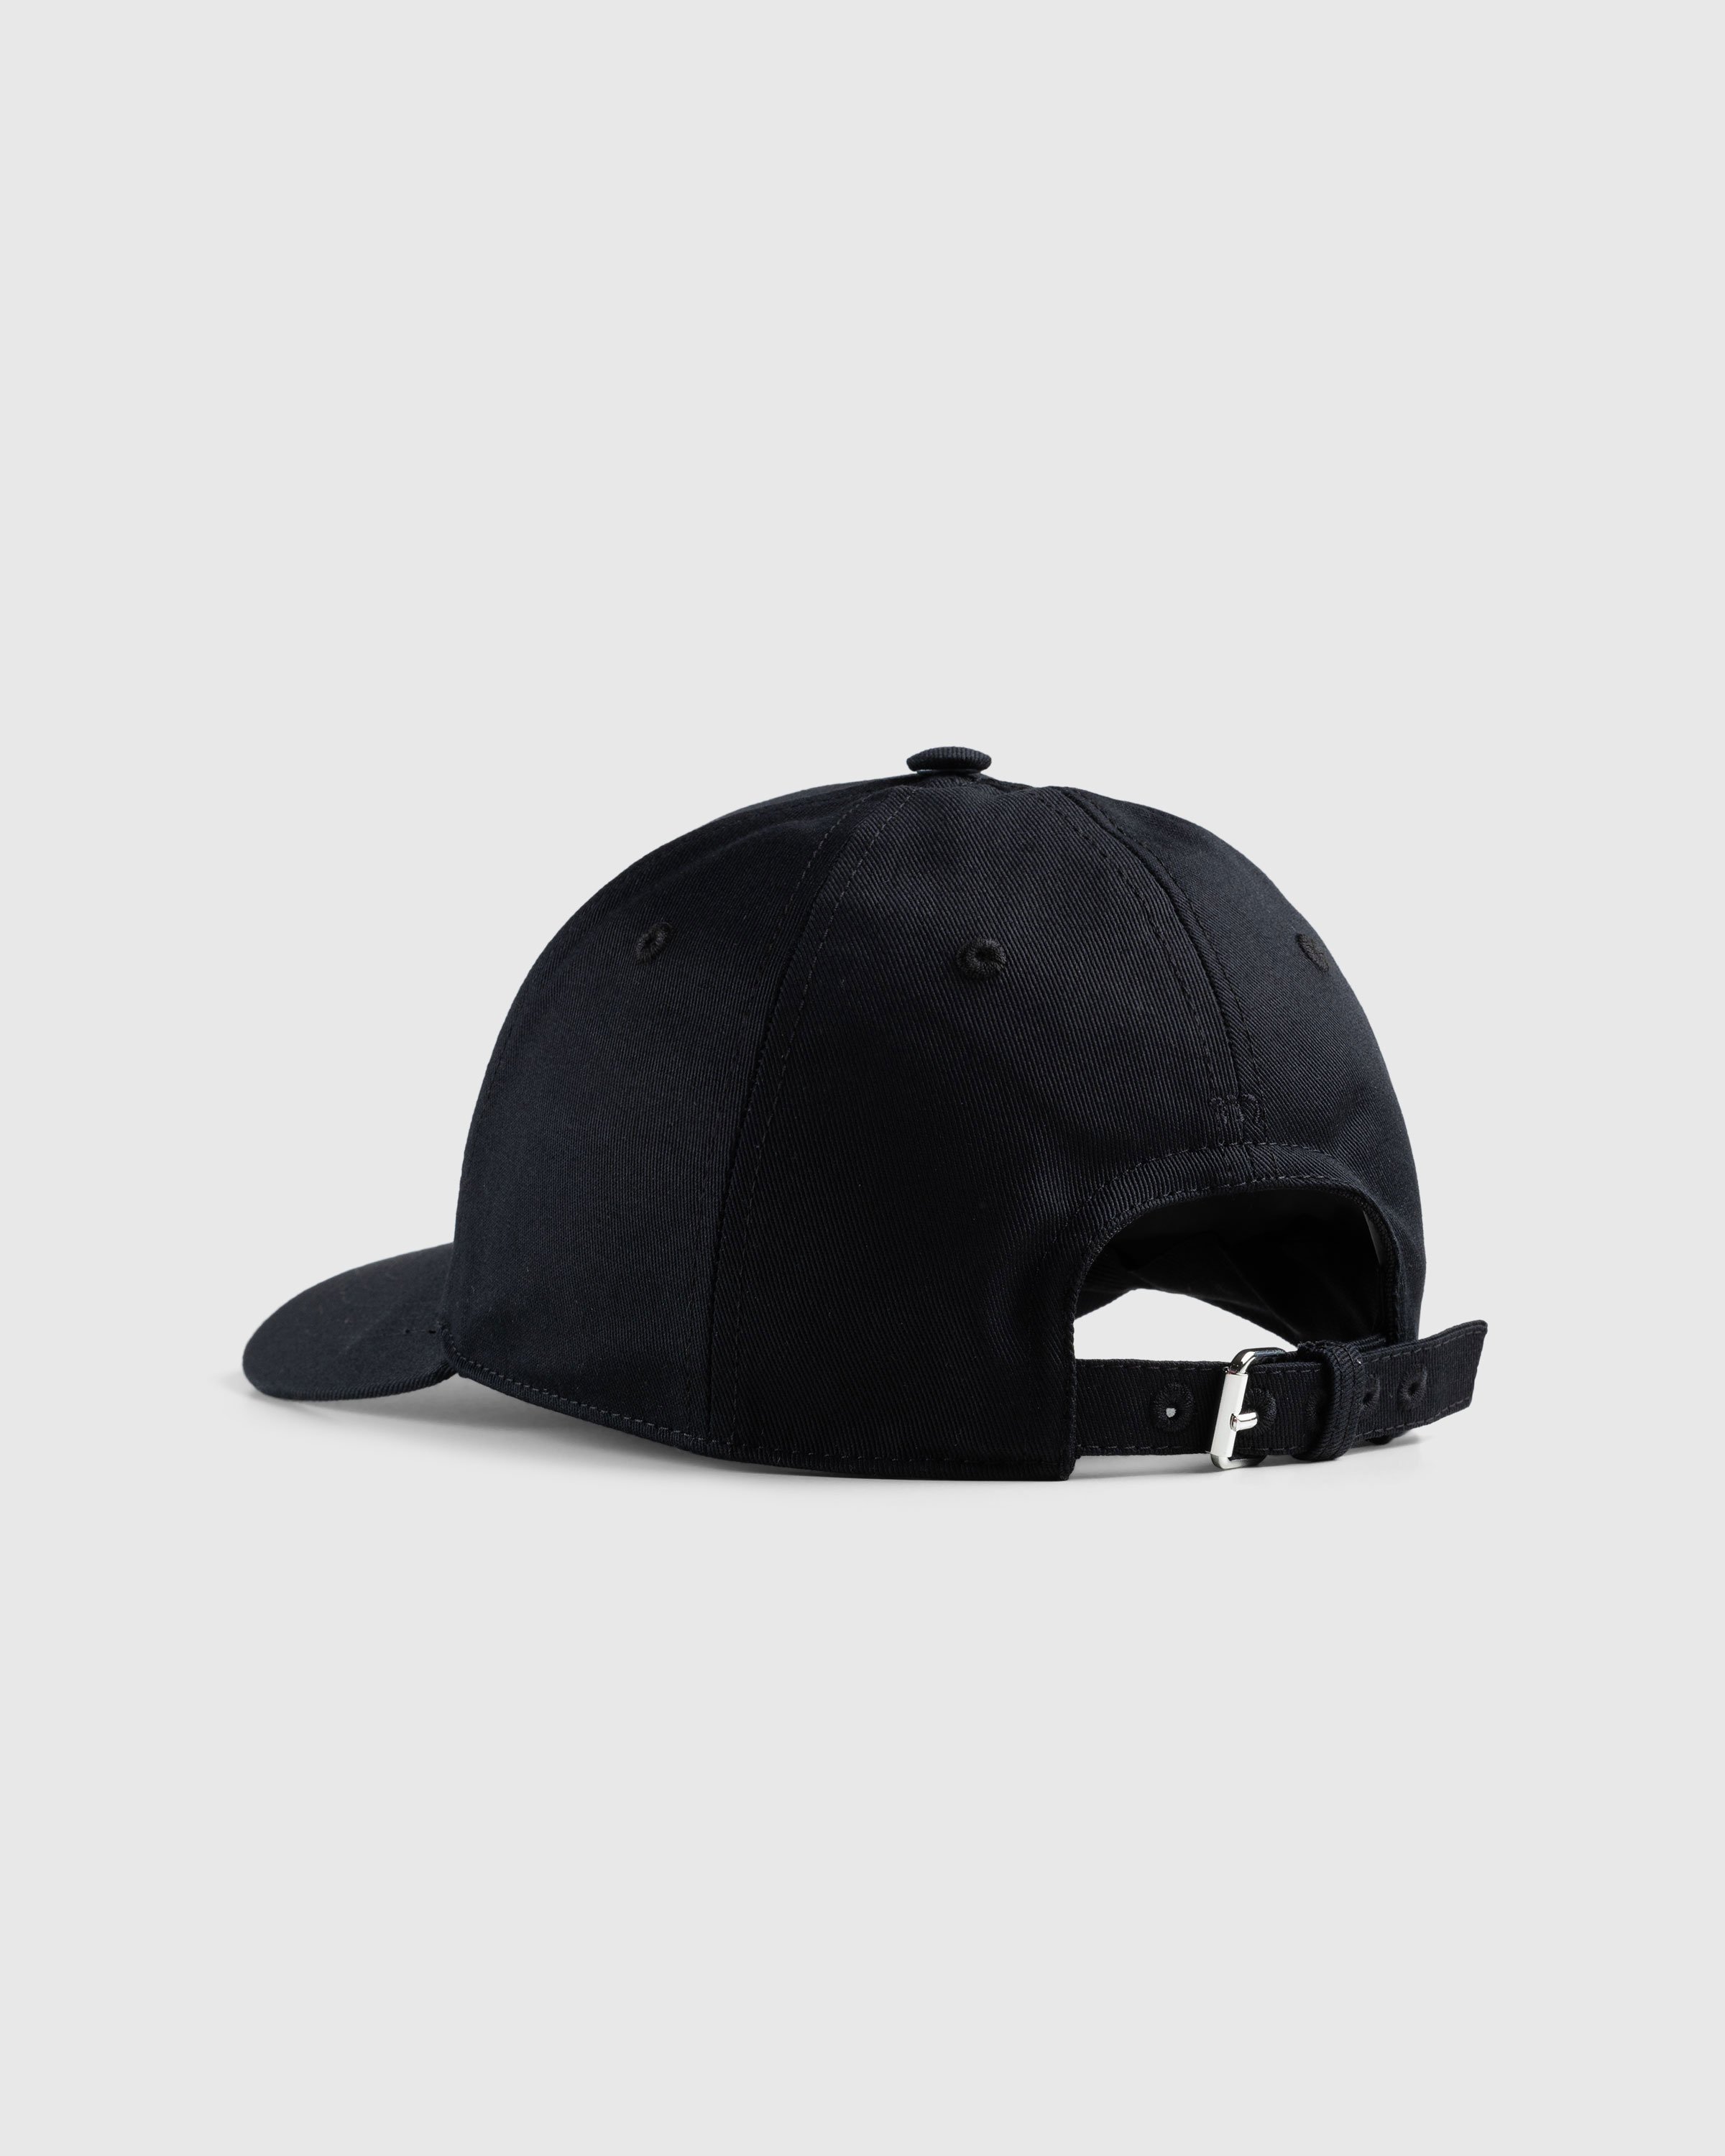 Meta Campania Collective - Spike Baseball Hat Black - Accessories - Black - Image 3